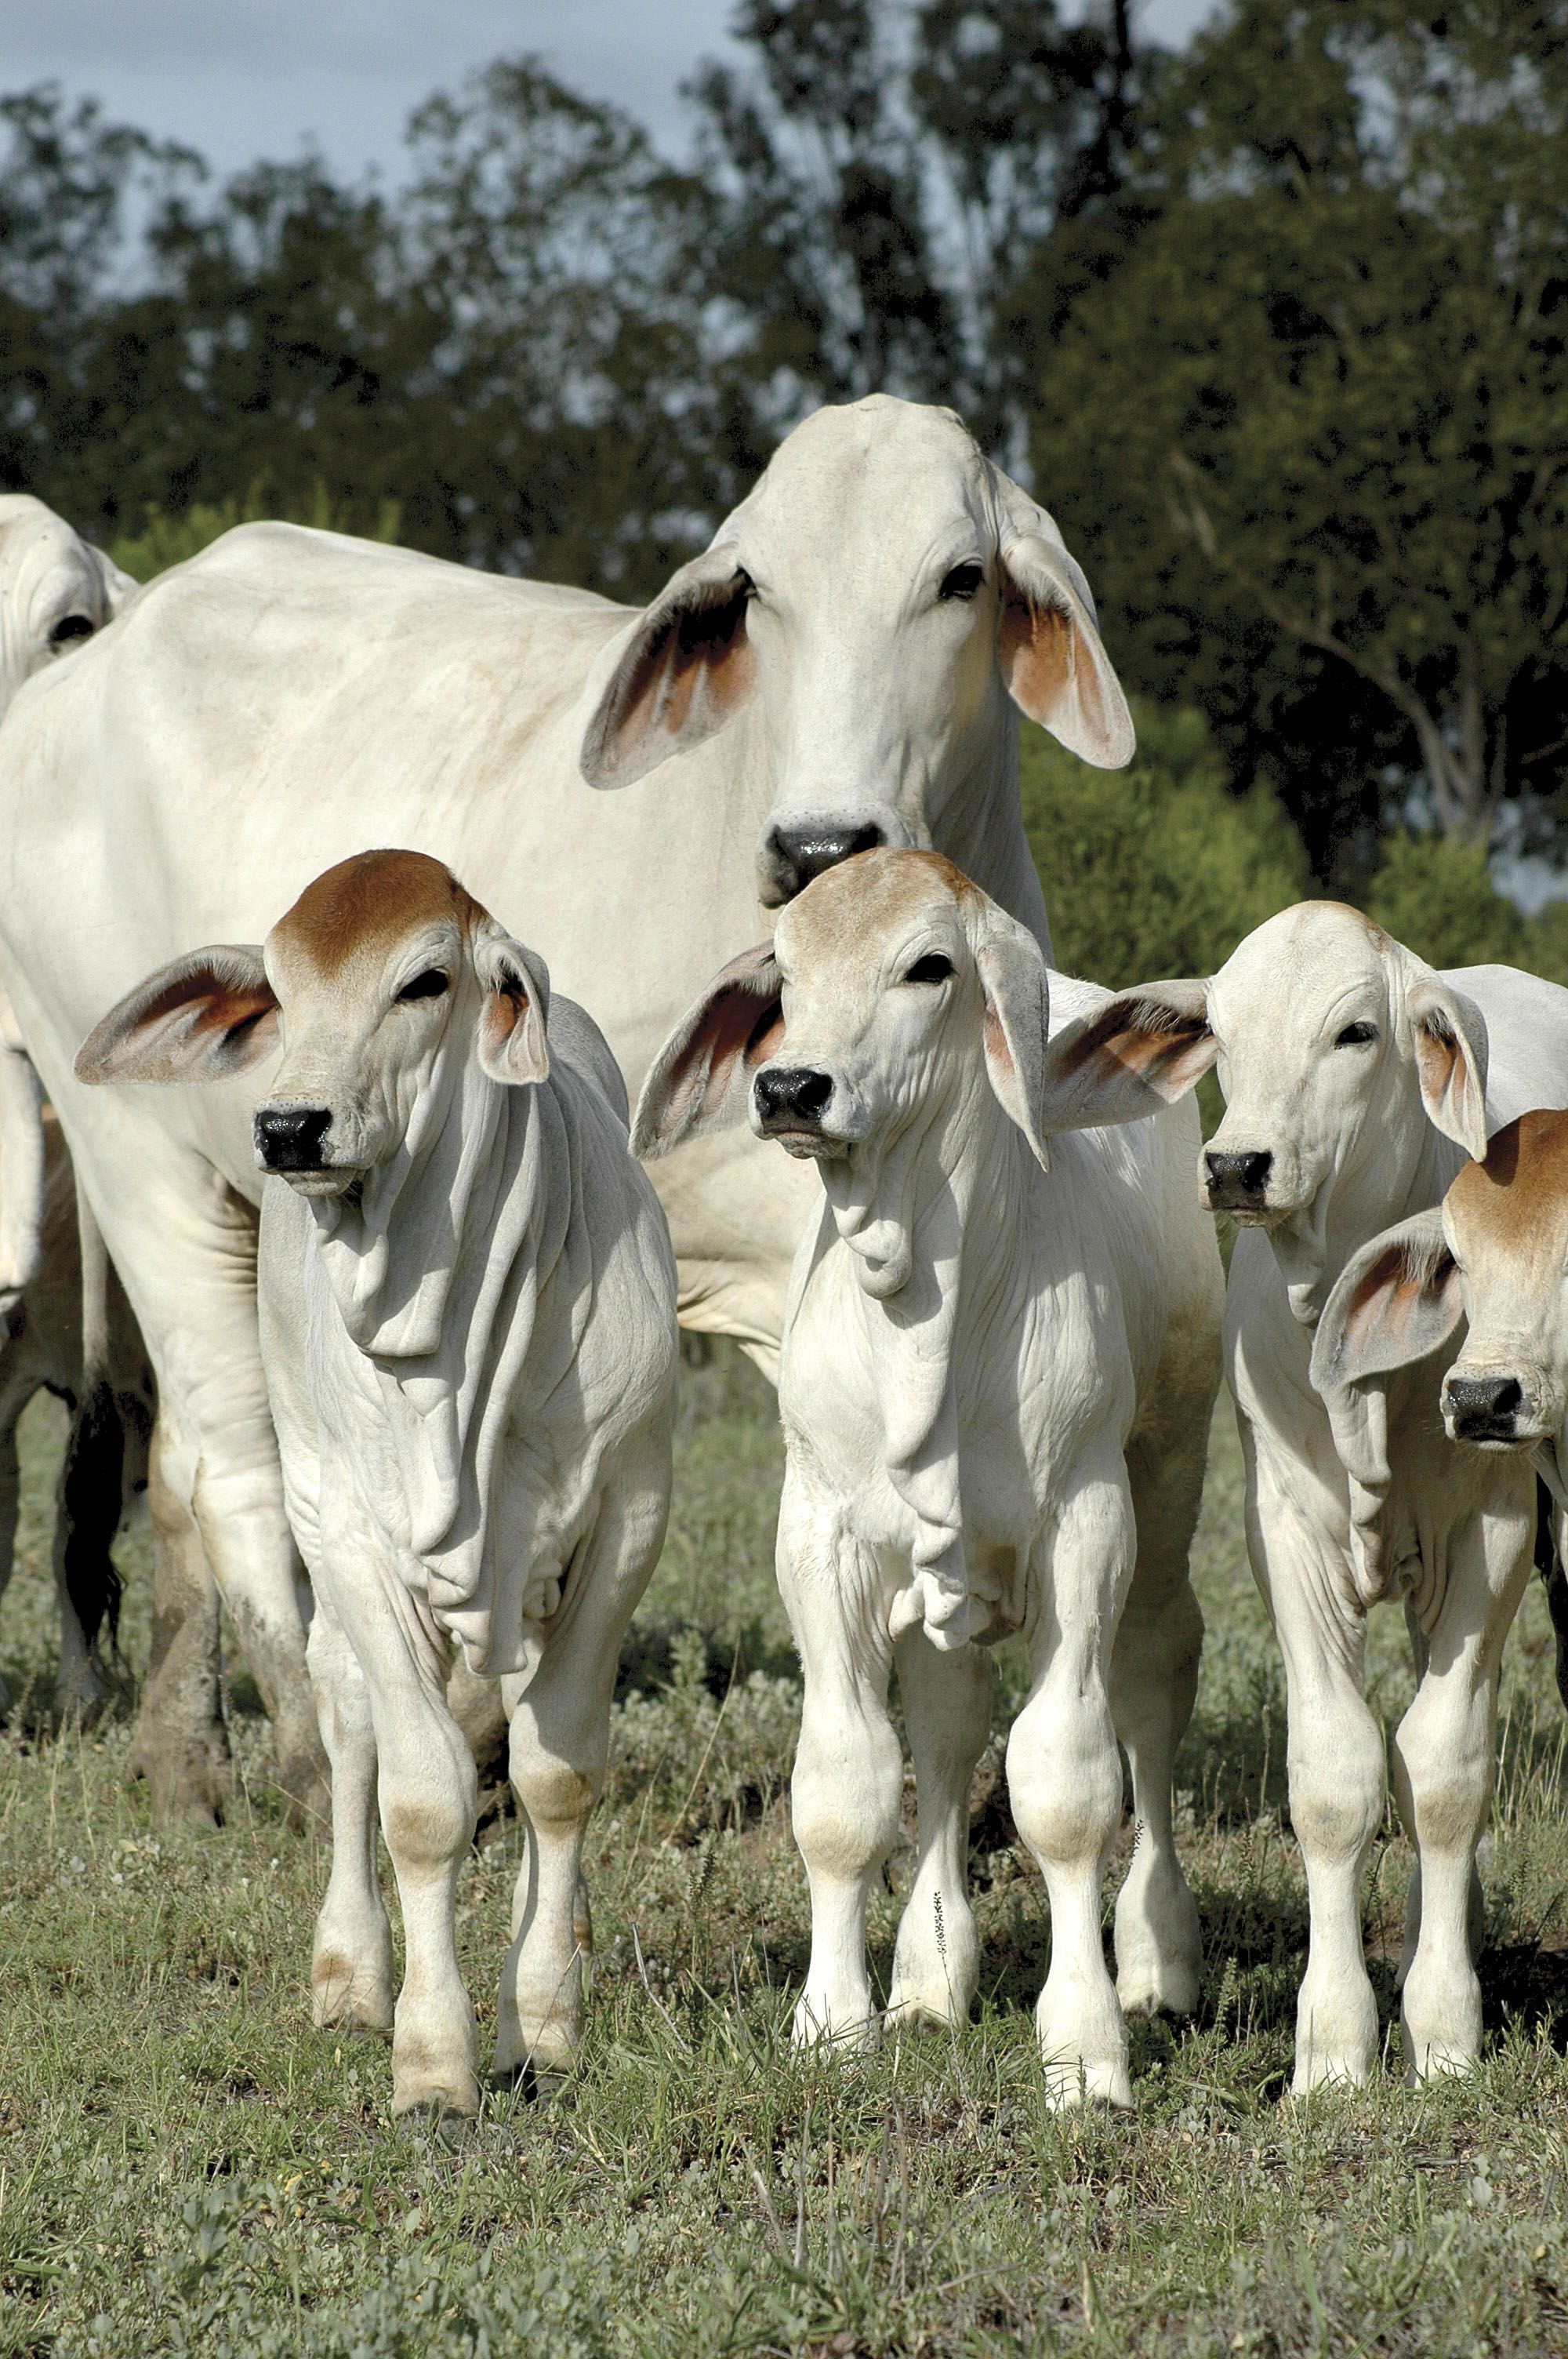 Brahama cattle ideas. cattle, farm animals, animals